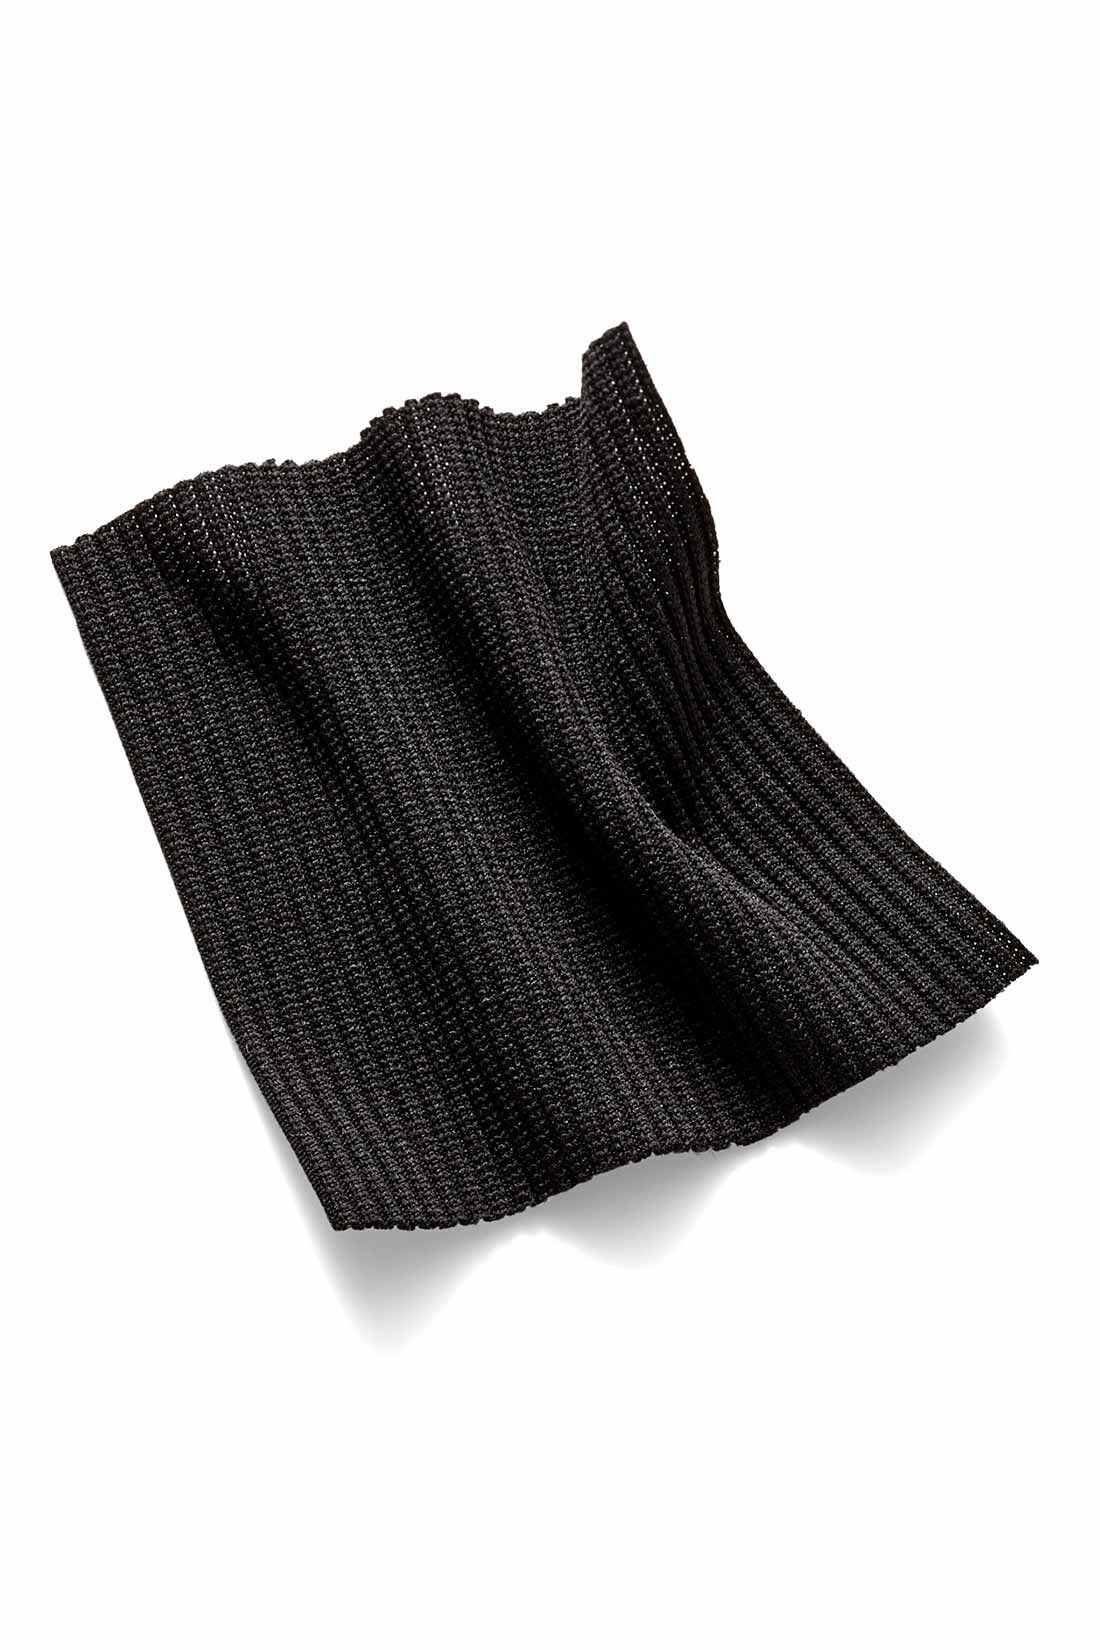 IEDIT|【コーデ買いキャンペーン】IEDIT[イディット]　福田麻琴さんコラボ リブ素材のレギンス〈ブラック〉|肌に張り付きにくく着心地も快適なストレッチのきいた細めリブ素材。洋服のように着られる上品なブラック。